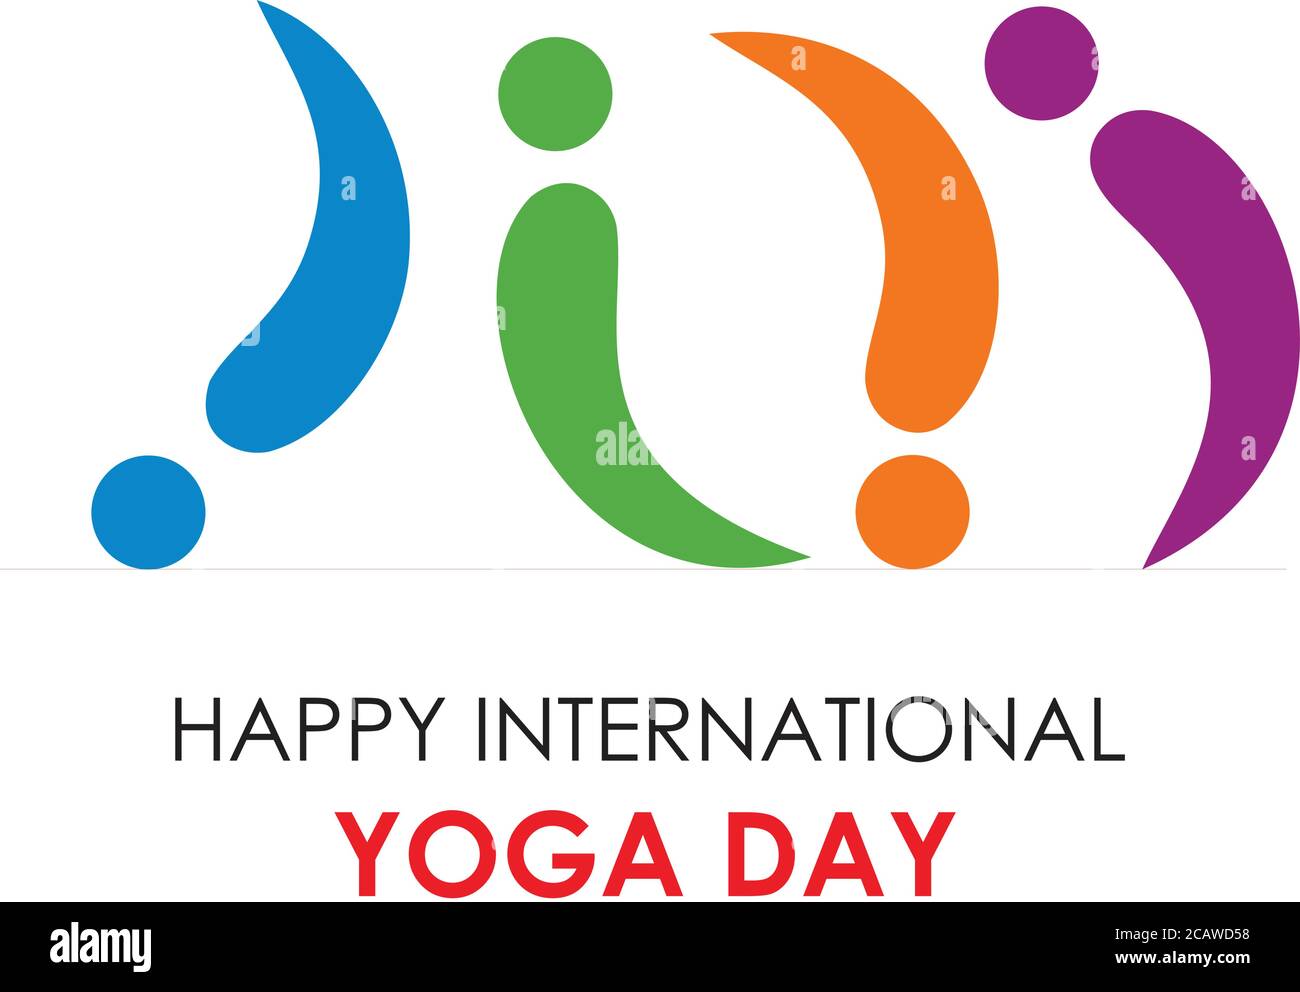 International yoga day greeting card Stock Vector